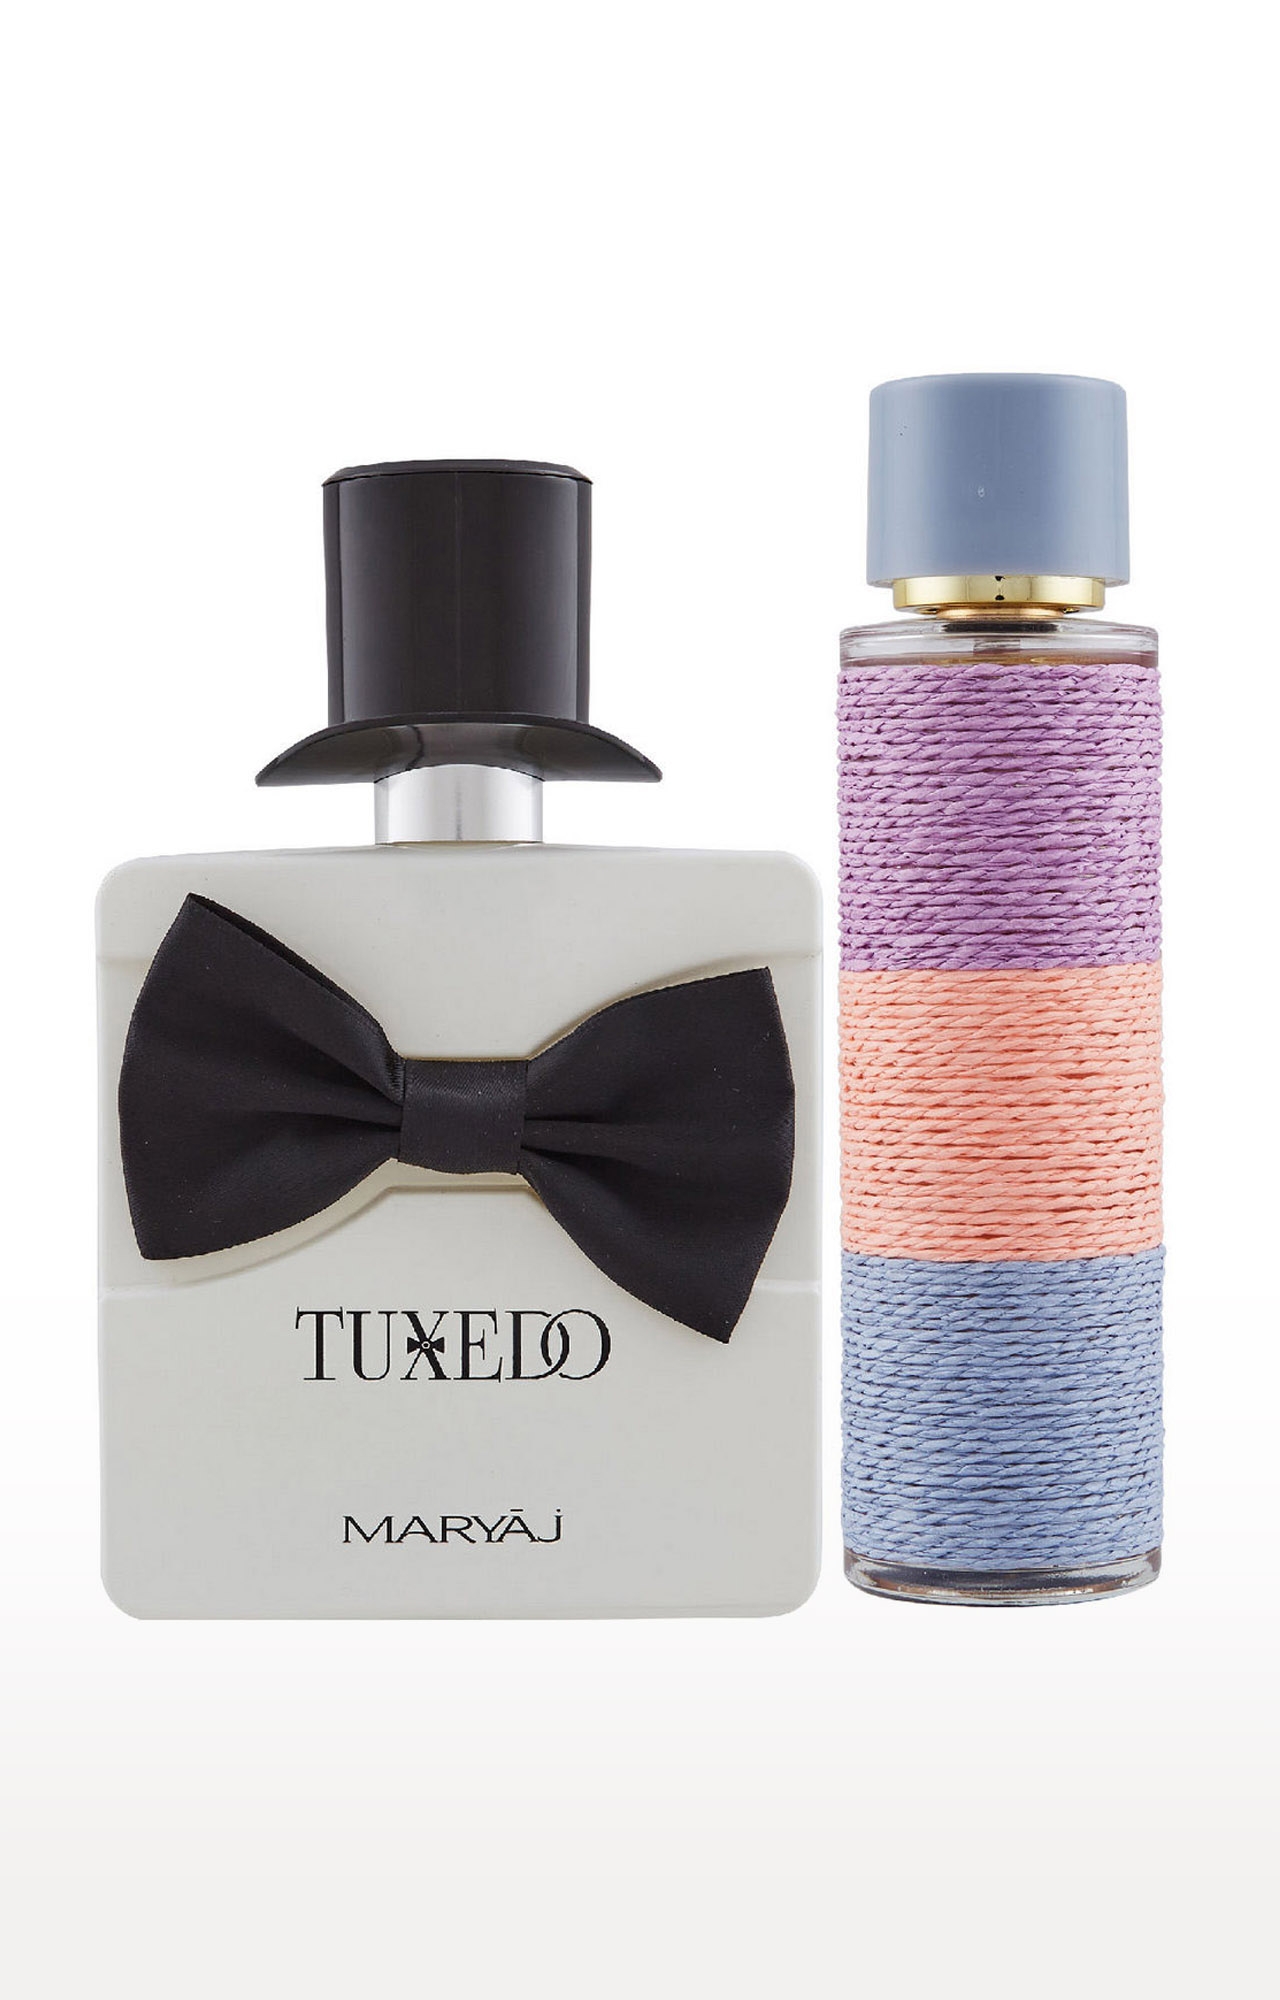 Maryaj Tuxedo Eau De Parfum Perfume 100ml for Men and Maryaj Deuce Femme Eau De Parfum Fruity Perfume 100ml for WoMen